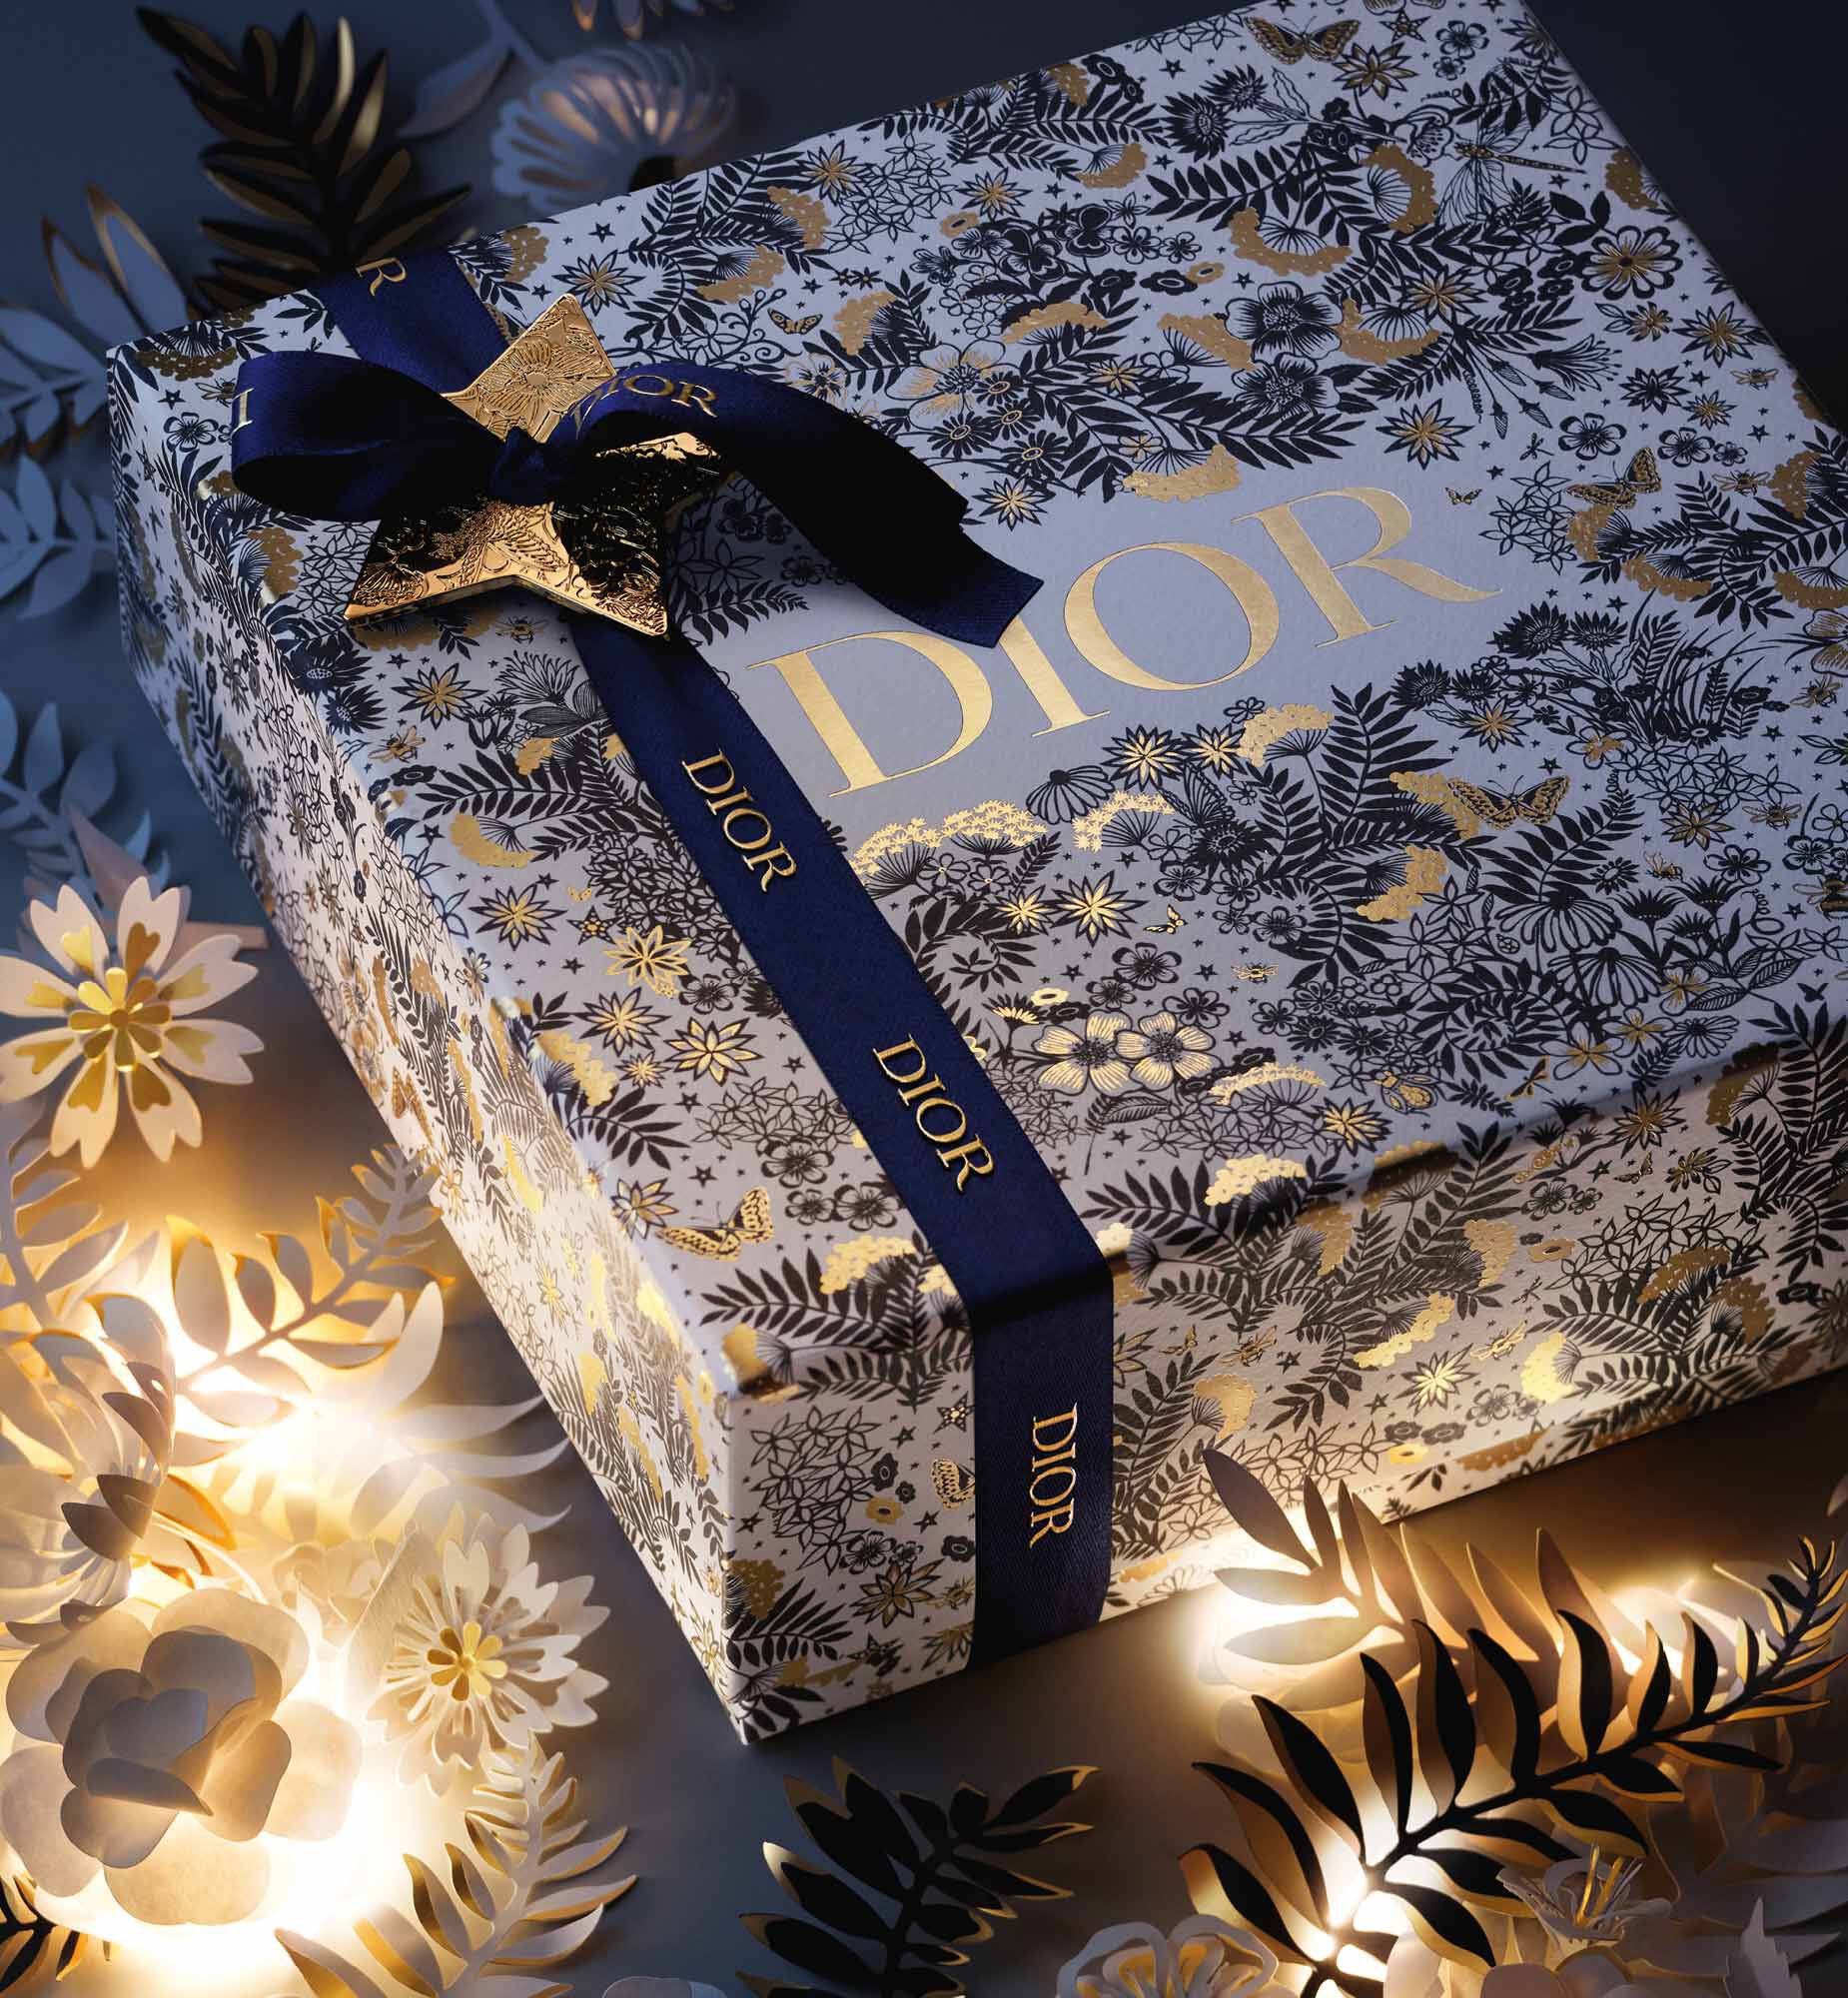 Nước Hoa Gift Set Dior Homme Giá Tốt Nhất  OrchardVn